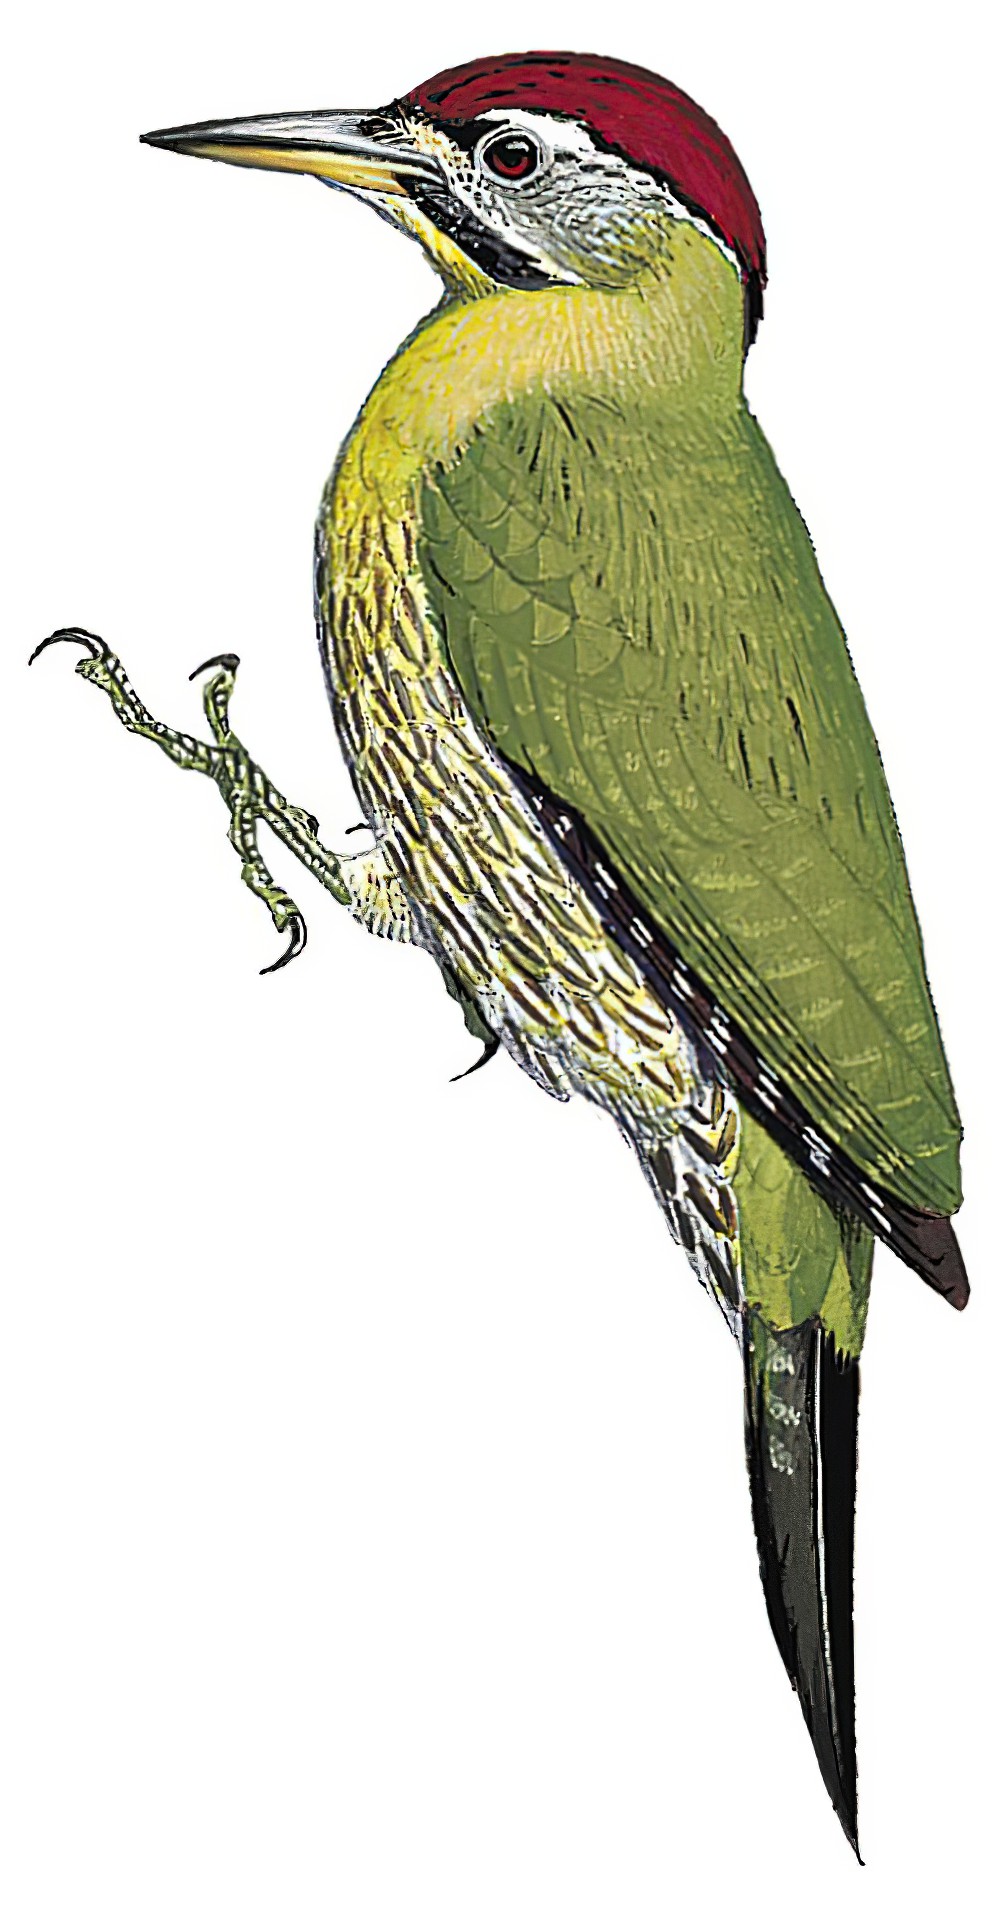 Laced Woodpecker / Picus vittatus